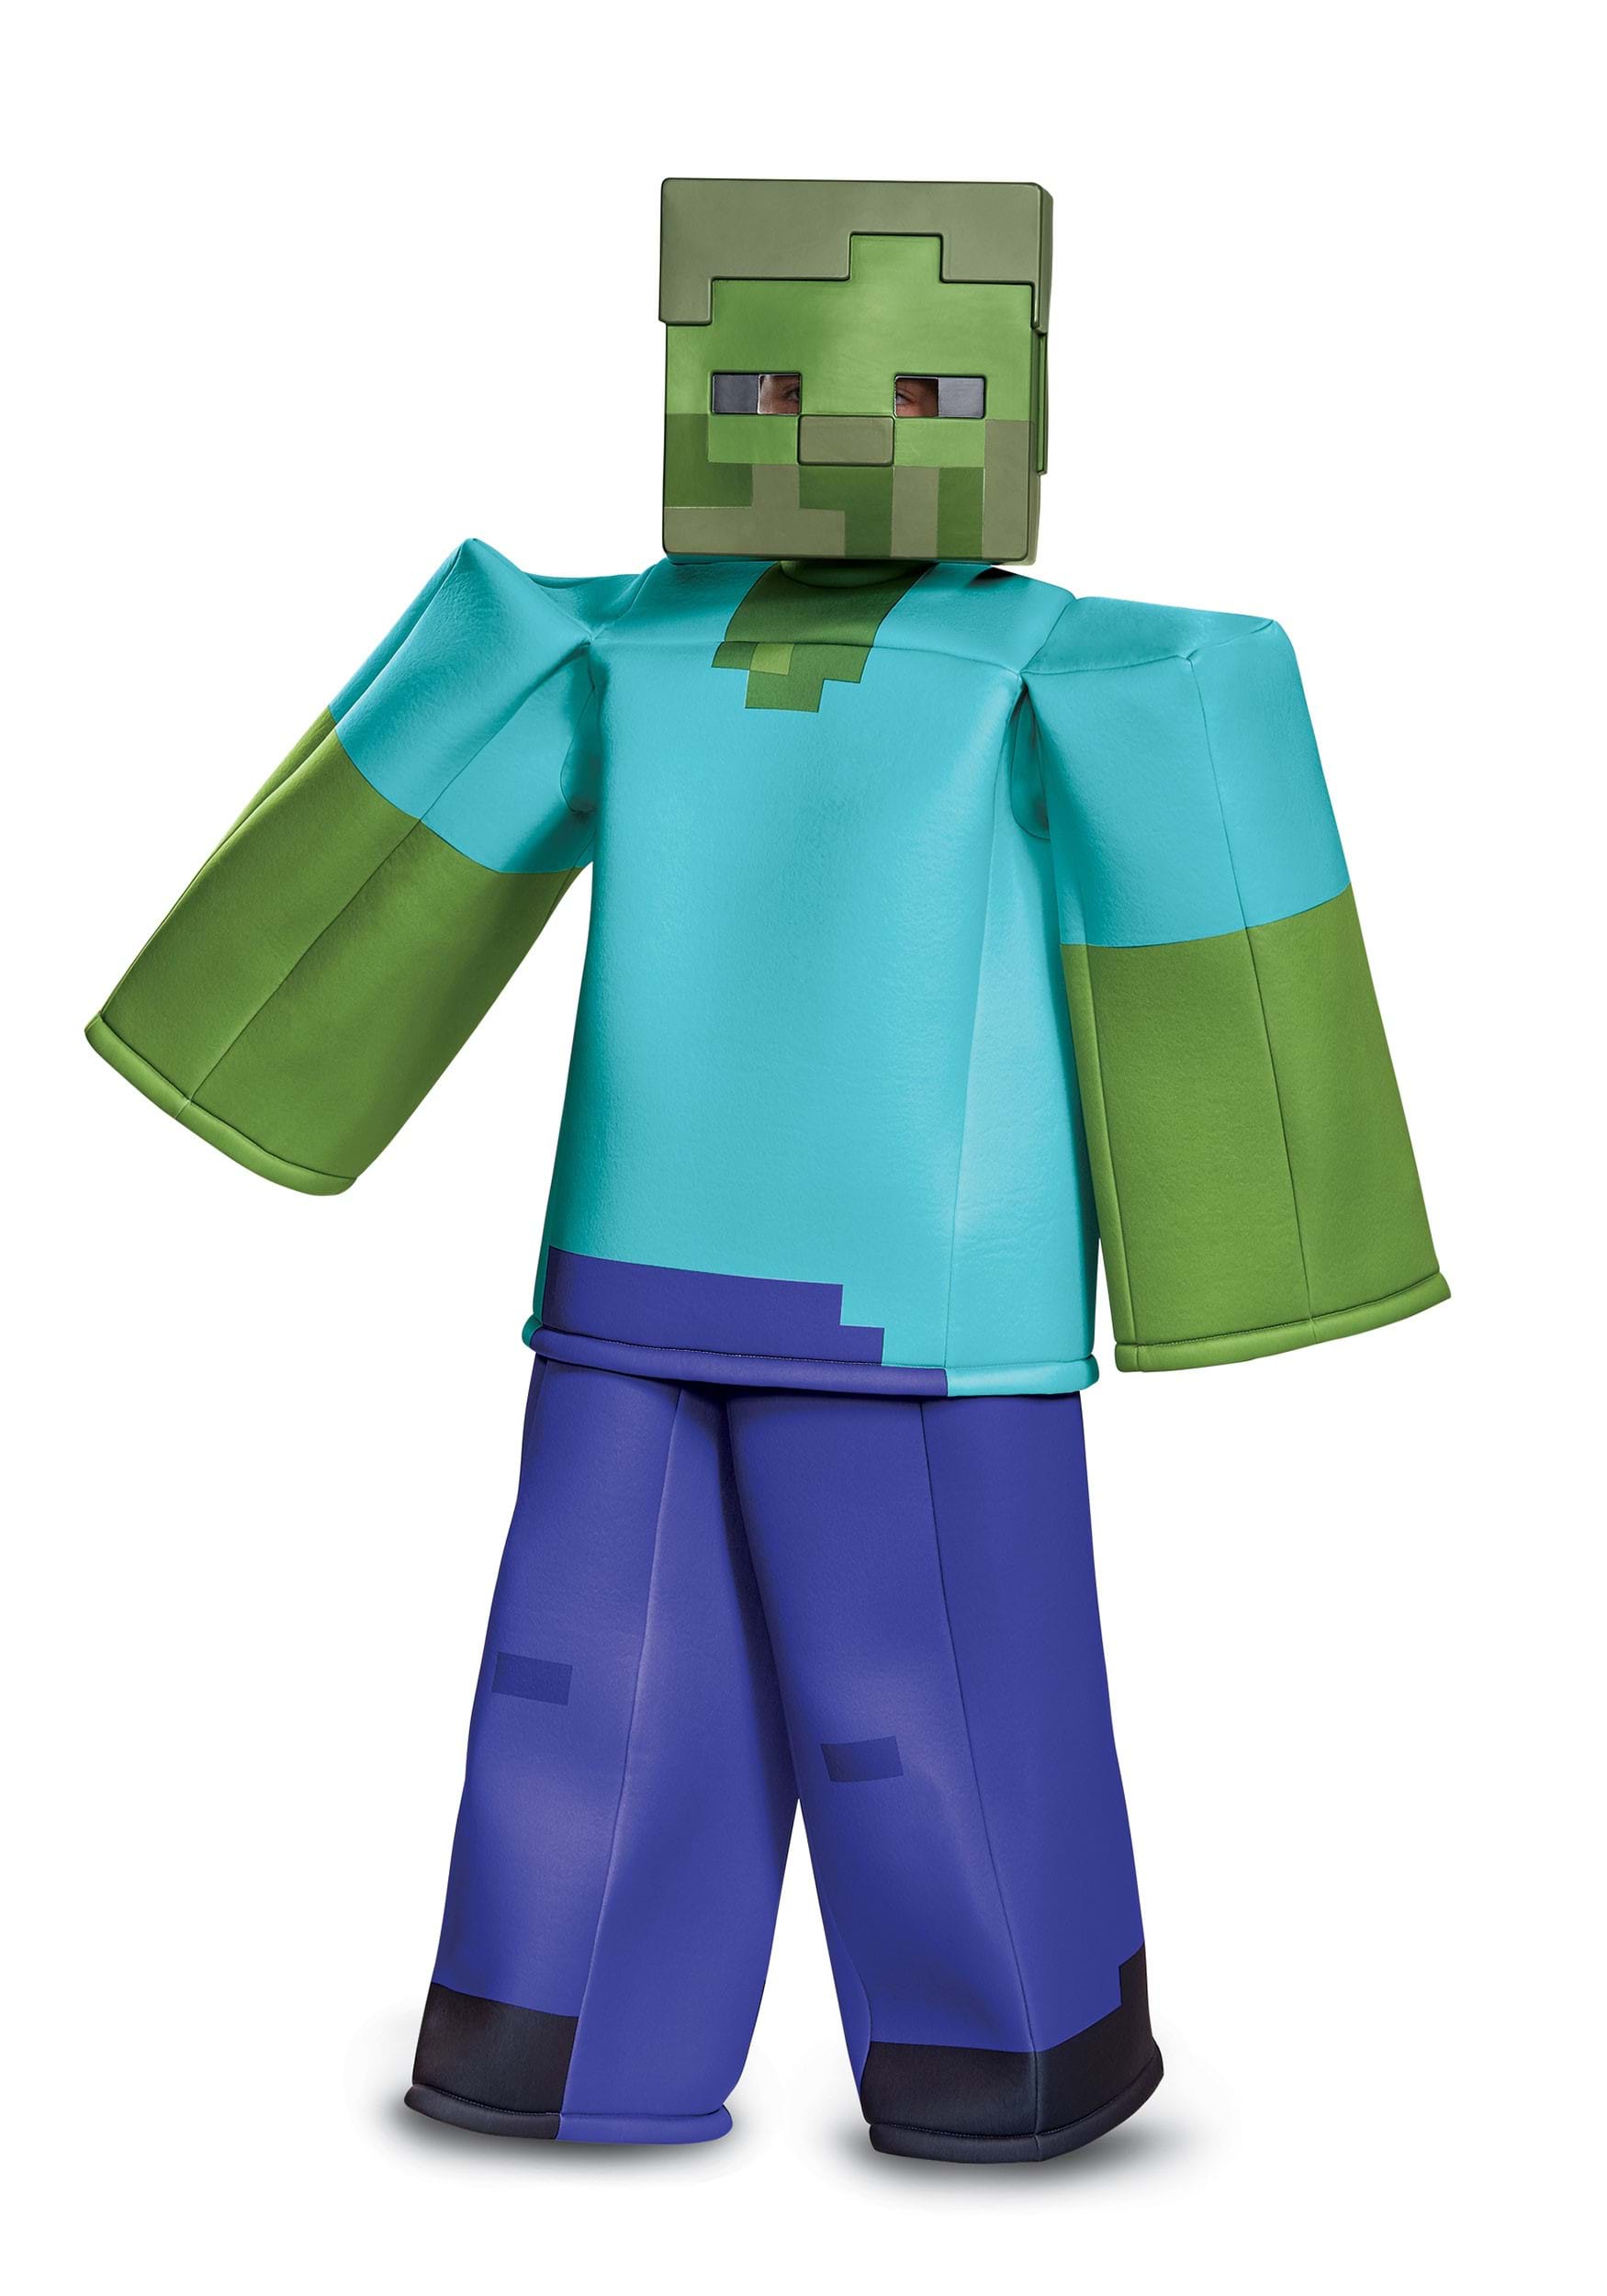 Kids Minecraft Zombie Pigman Costume